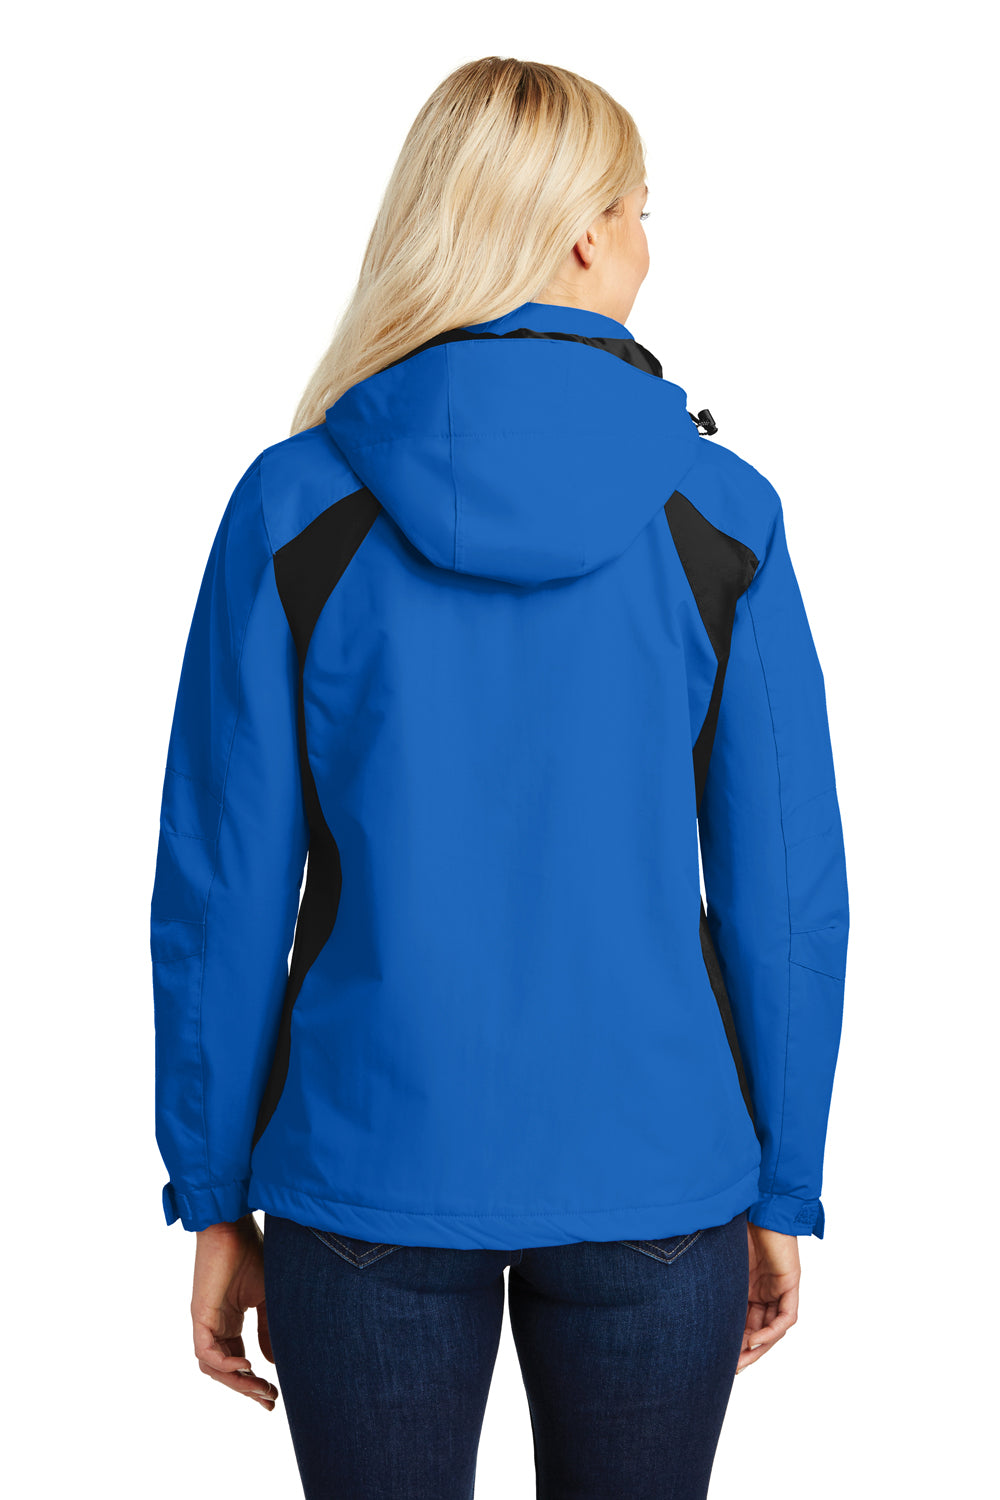 Port Authority L304 Womens All Season II Waterproof Full Zip Hooded Jacket Snorkel Blue/Black Back